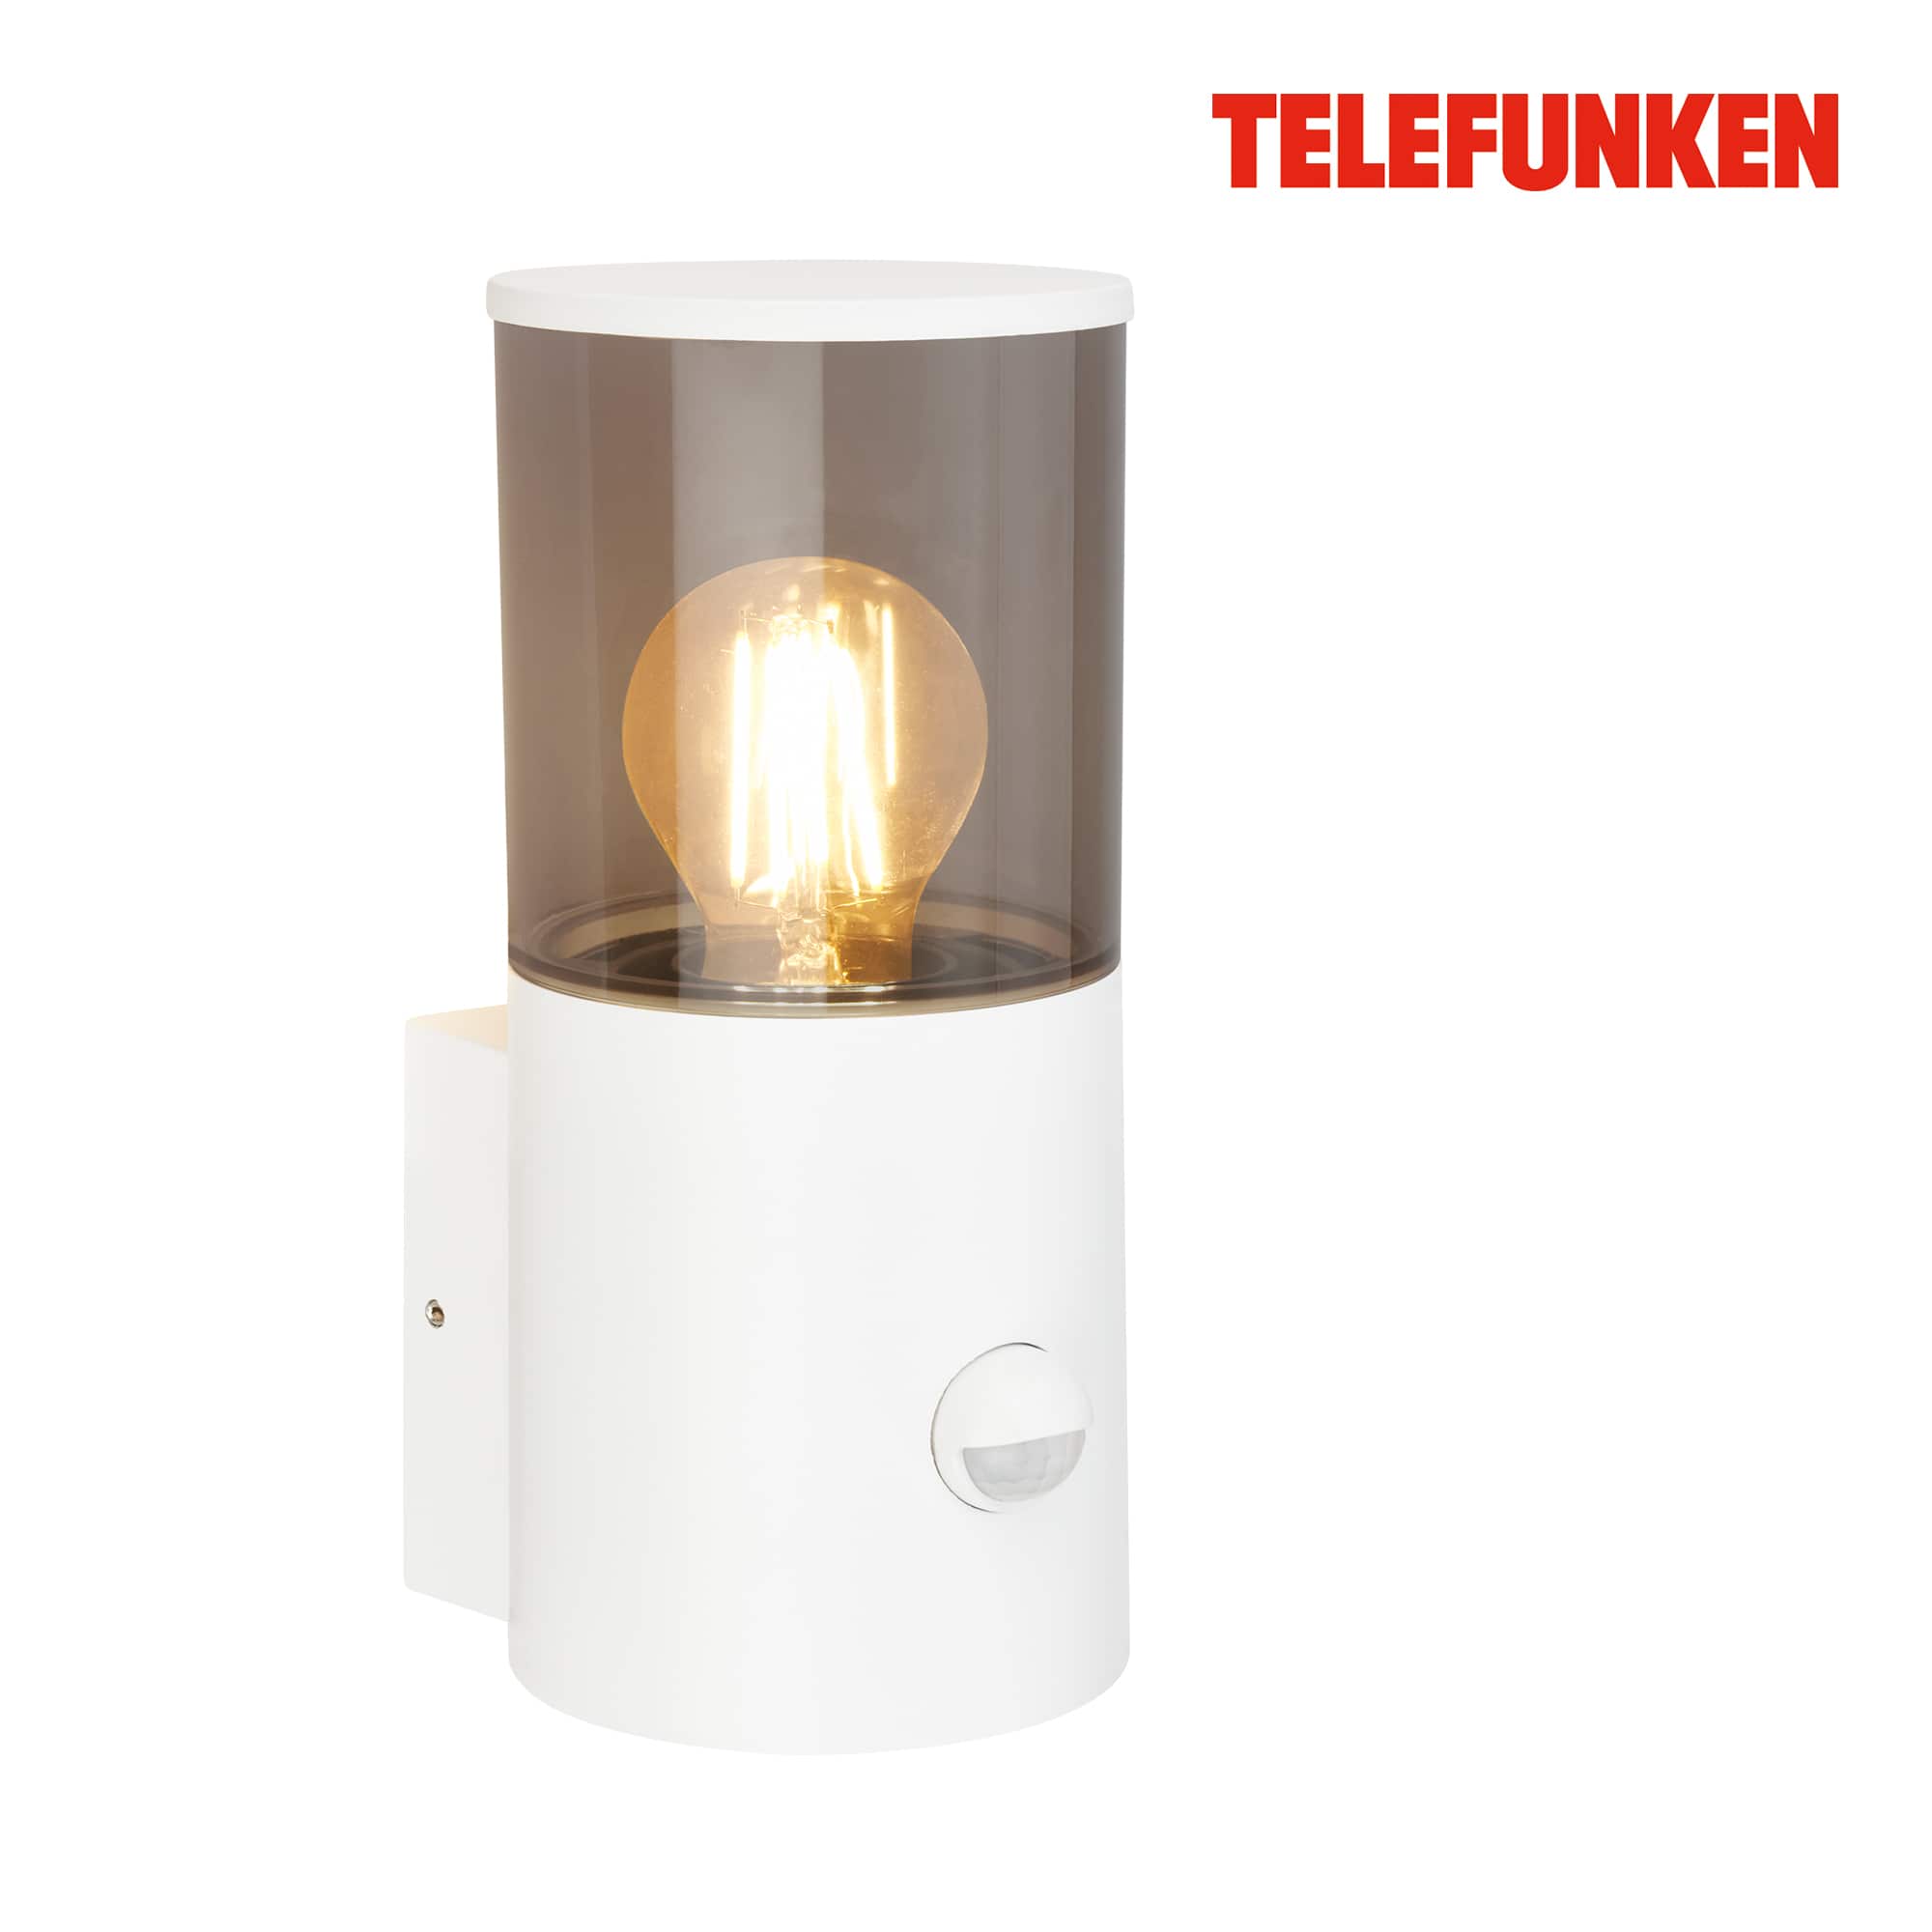 Telefunken LED wall lamp, motion detector, splash water protection